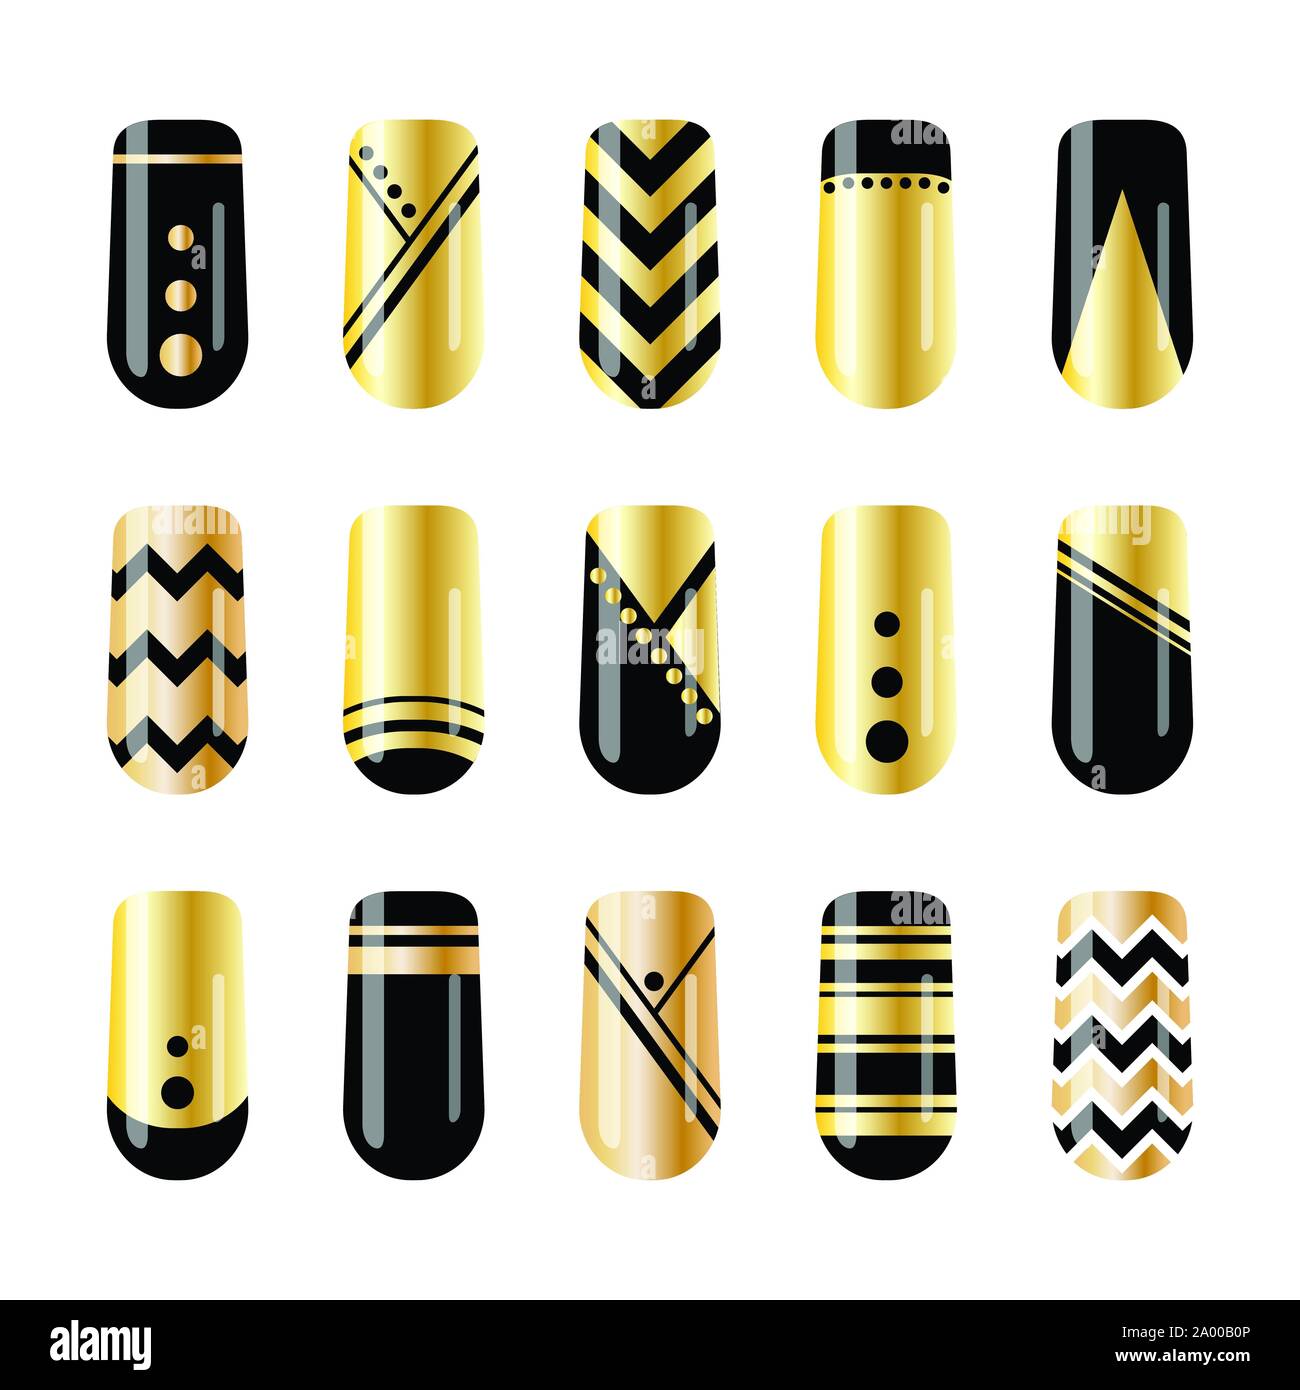 Nail art. Gold and black nail stickers design Stock Vector